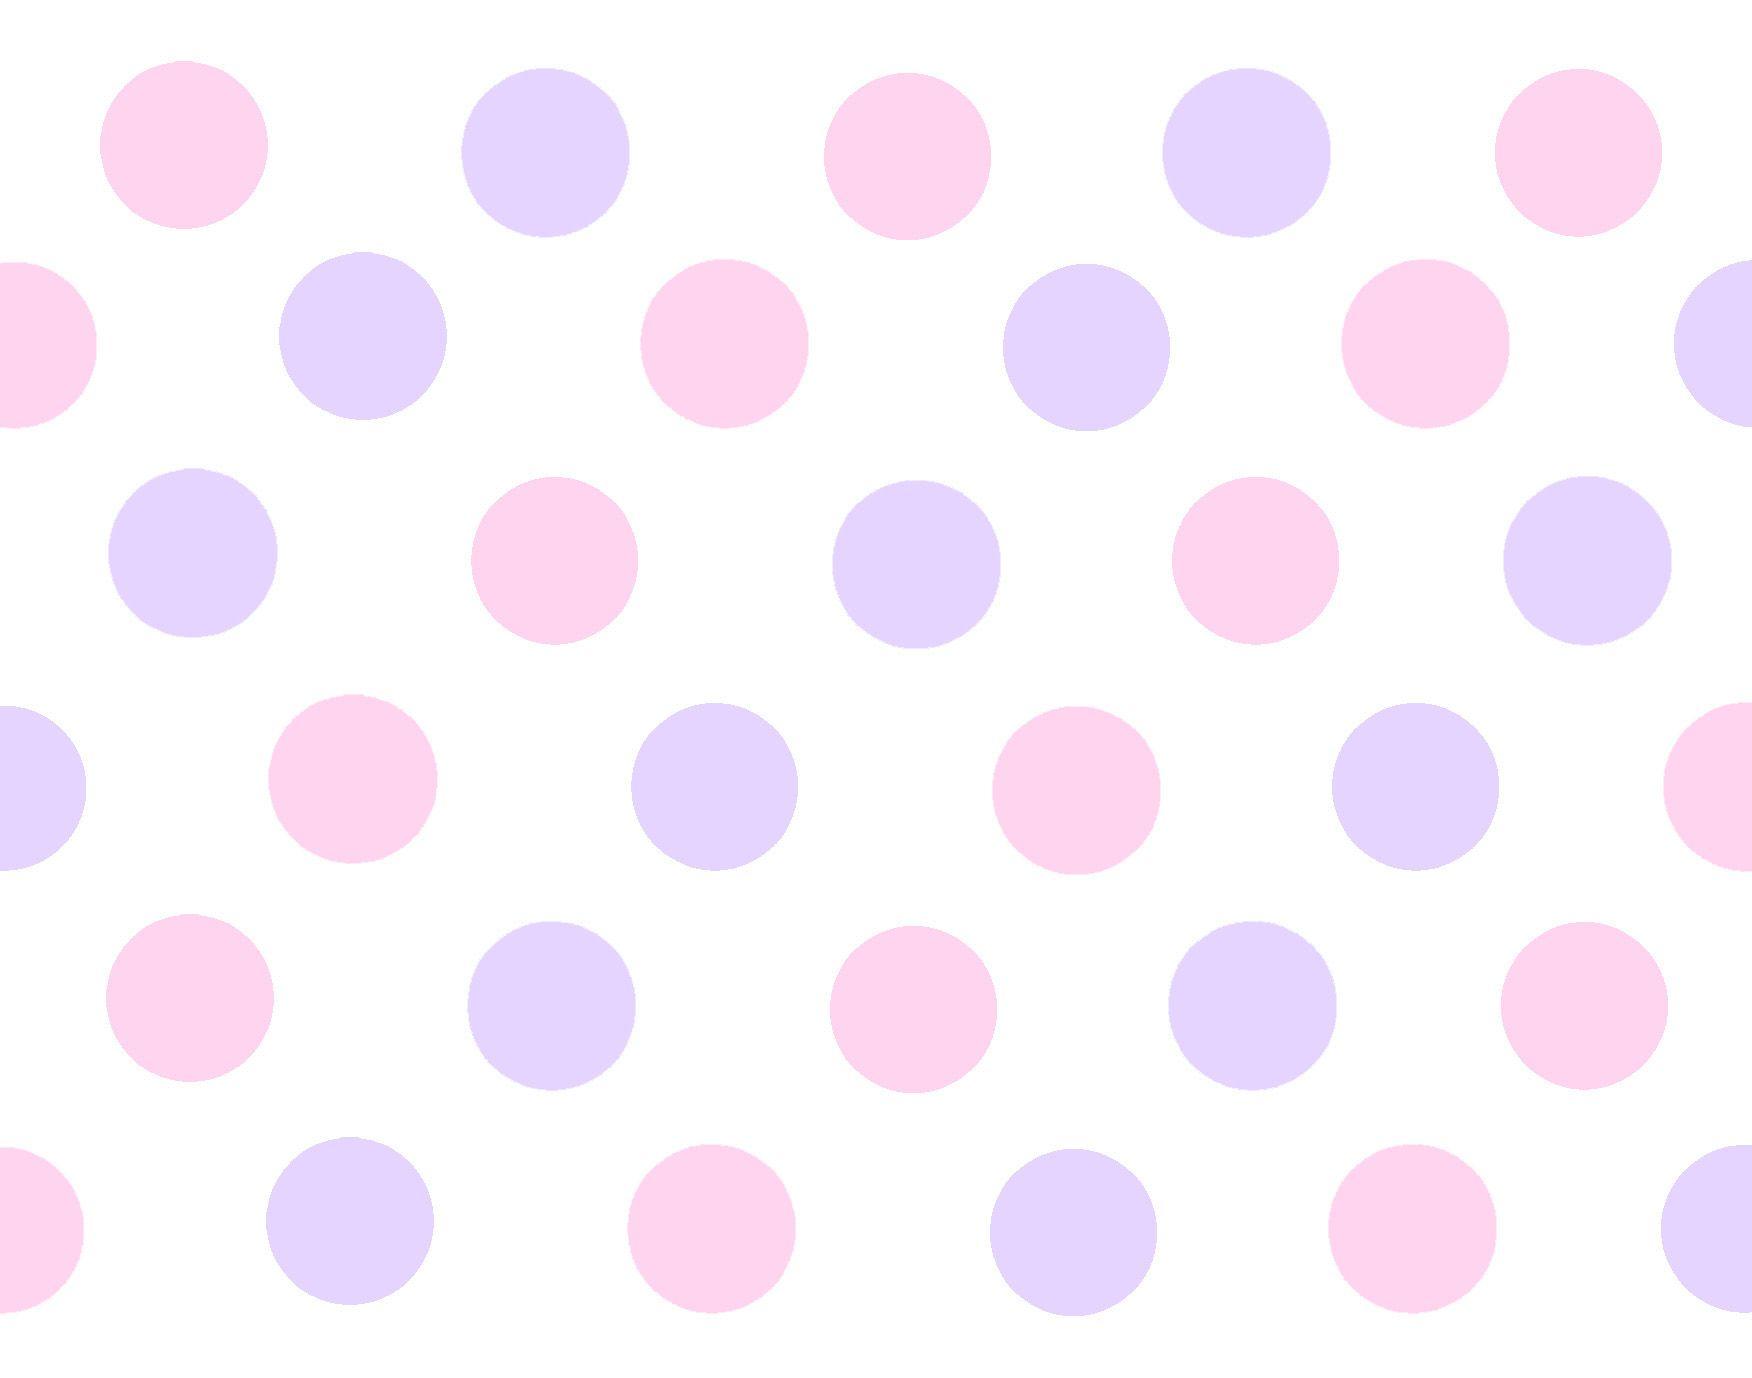 8. Black and Purple Polka Dot Nail Design - wide 11